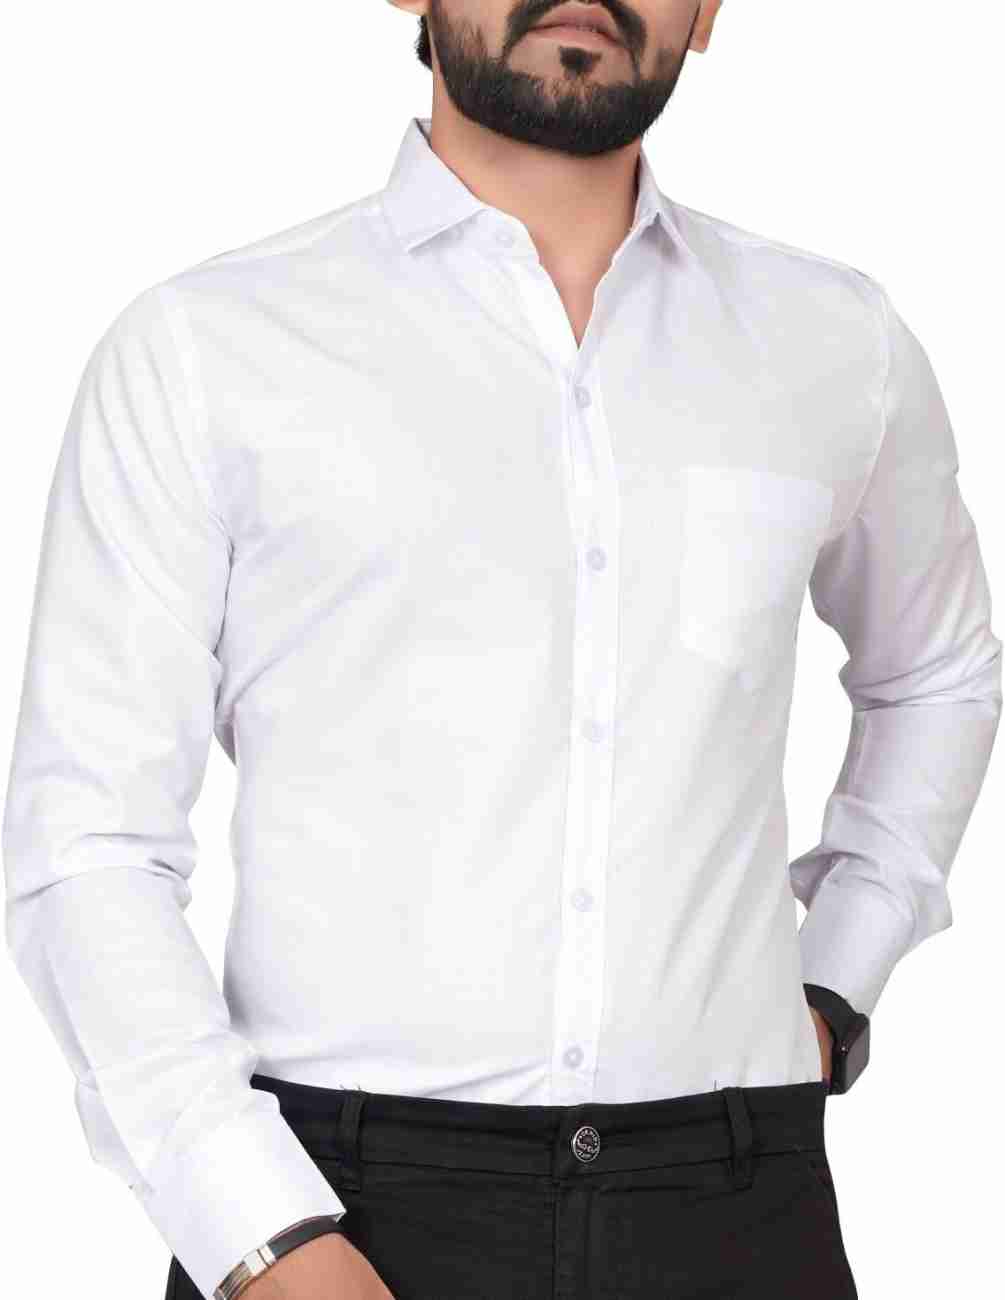 White shirt cotton